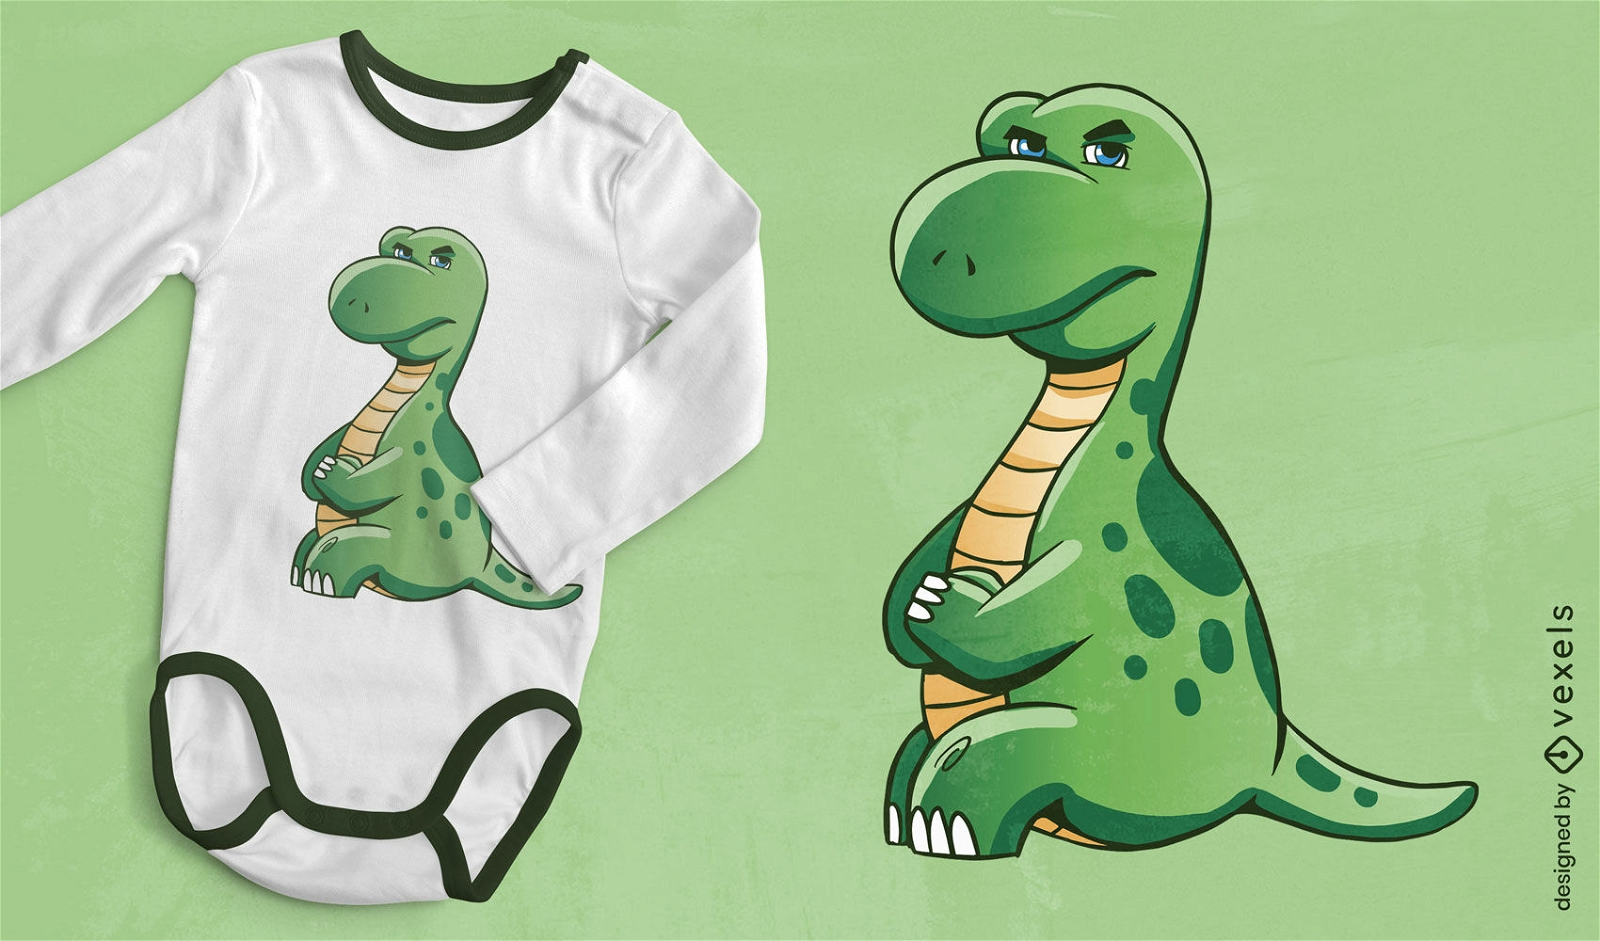 Cute angry dinosaur t-shirt design